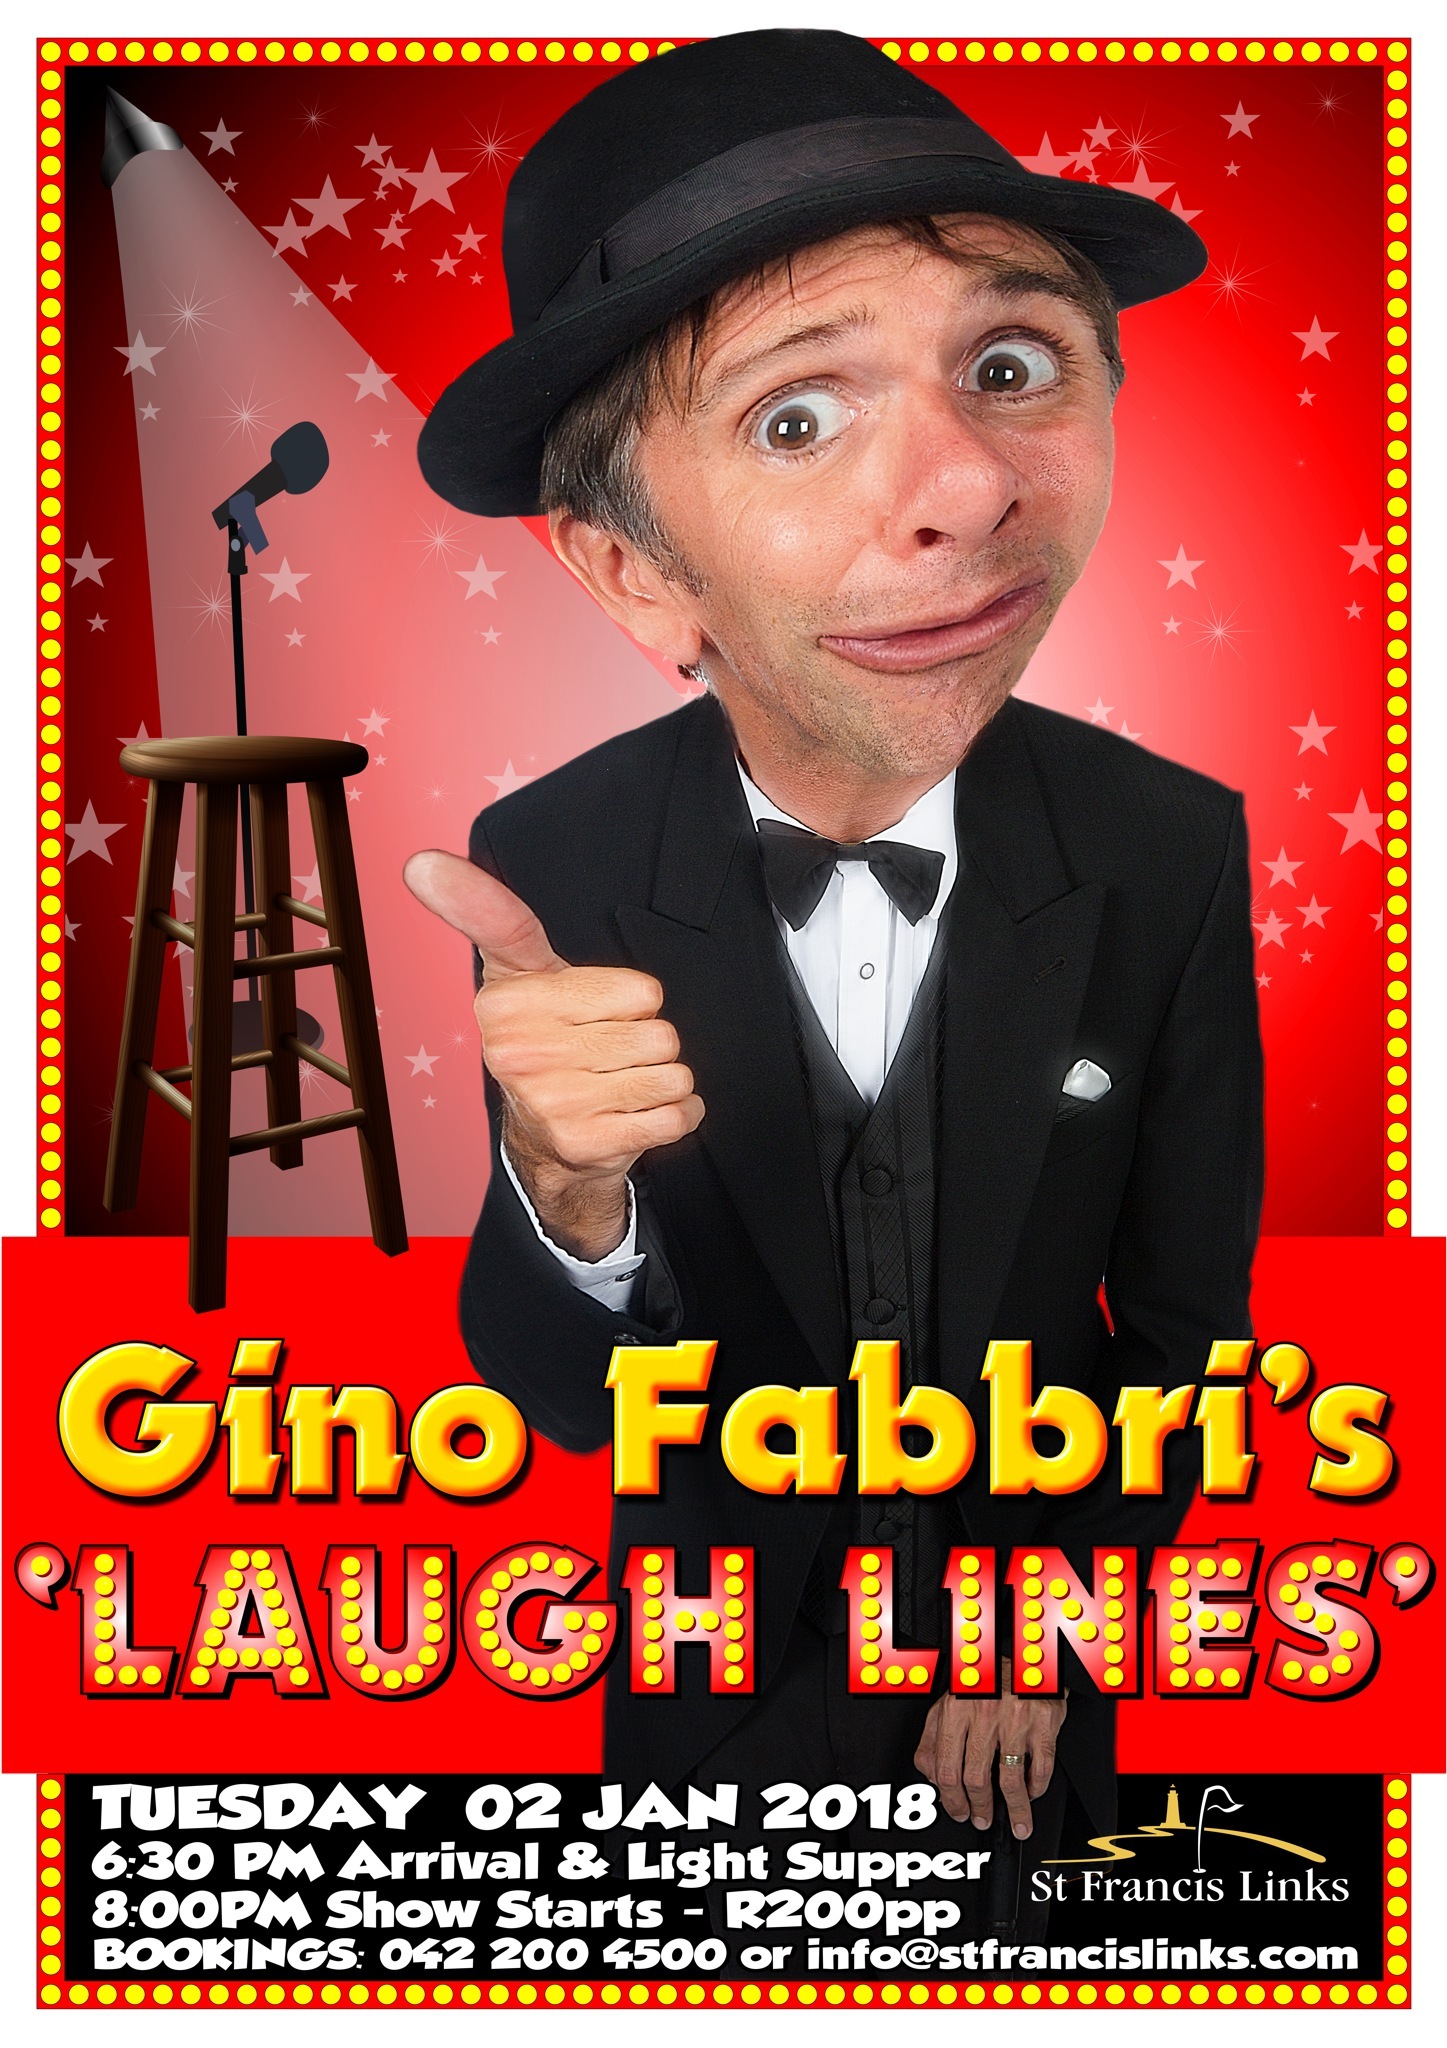 laugh lines gino fabbri Links small